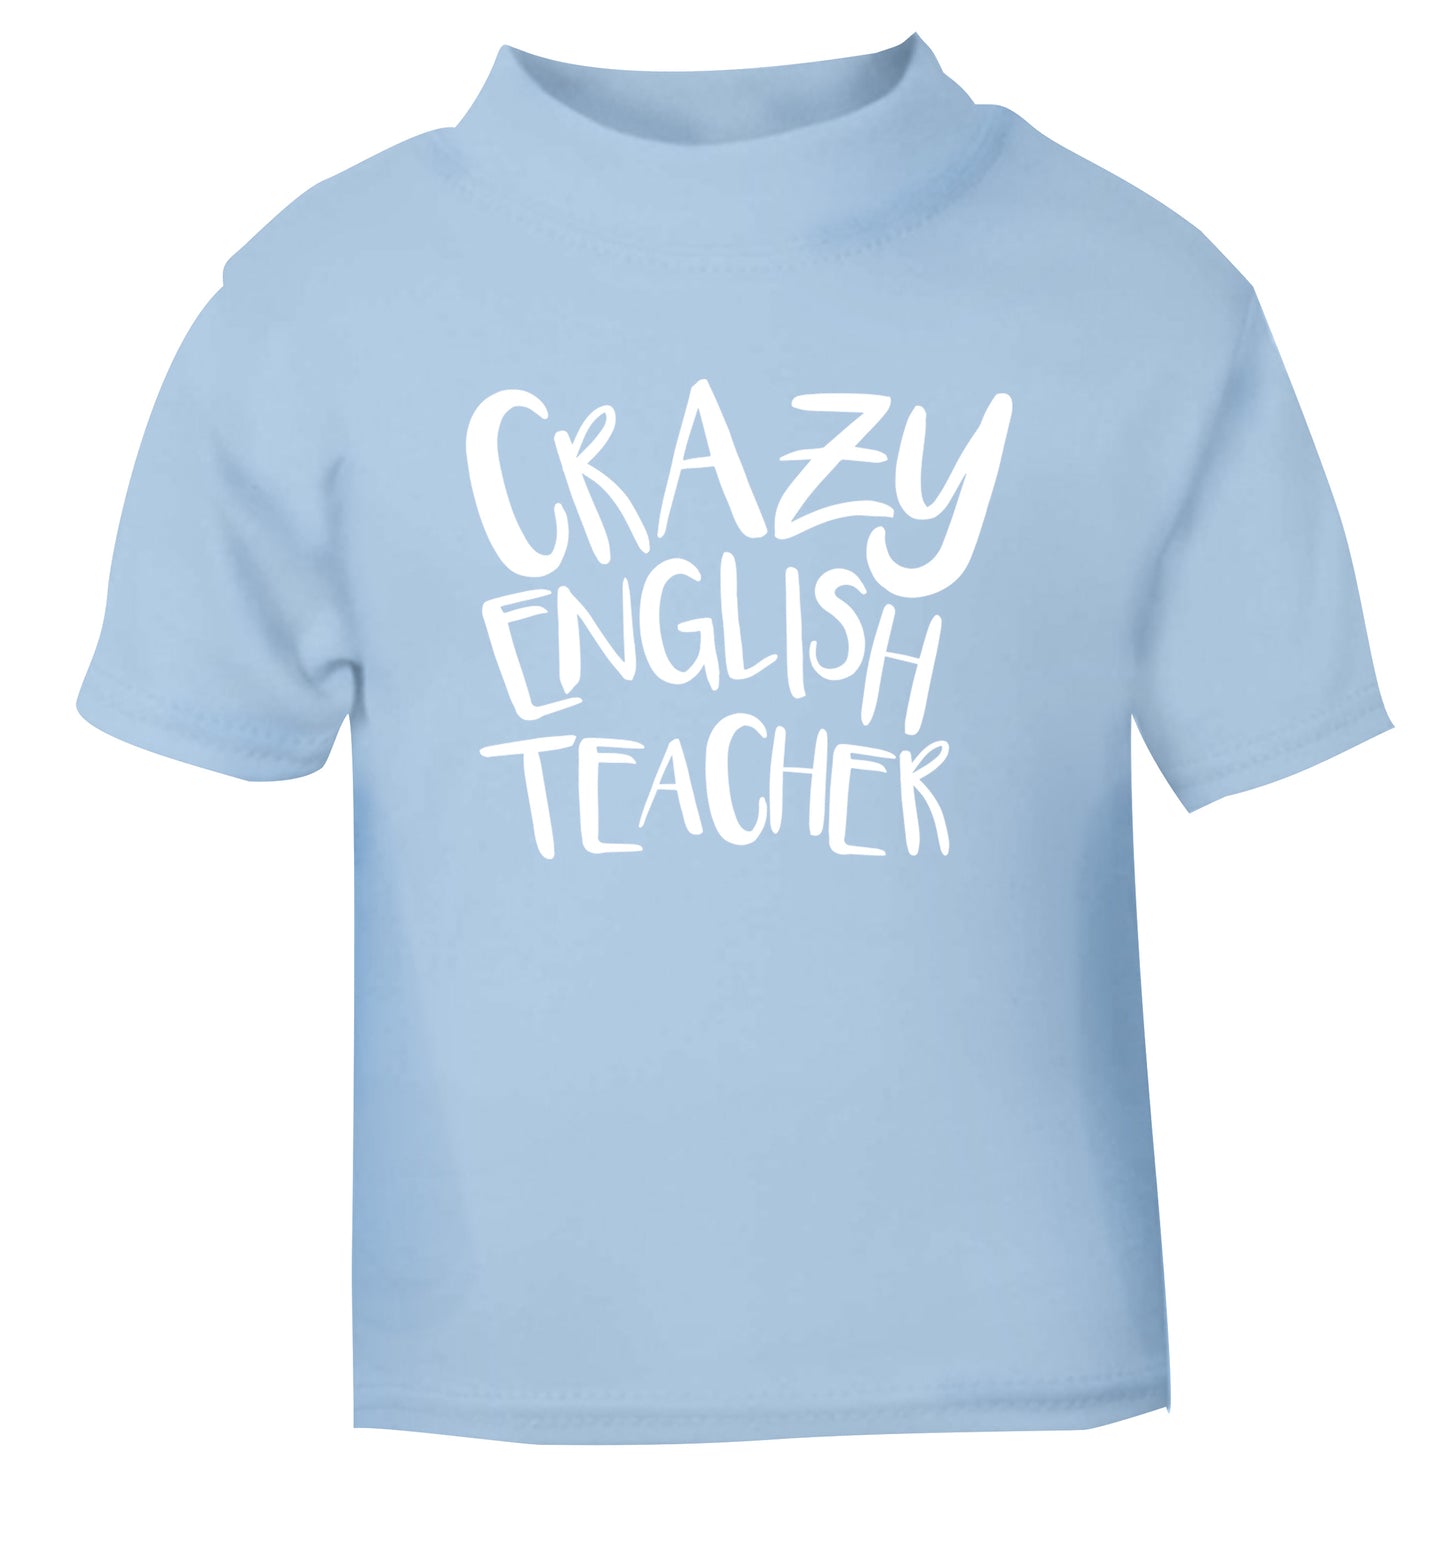 Crazy English Teacher light blue Baby Toddler Tshirt 2 Years